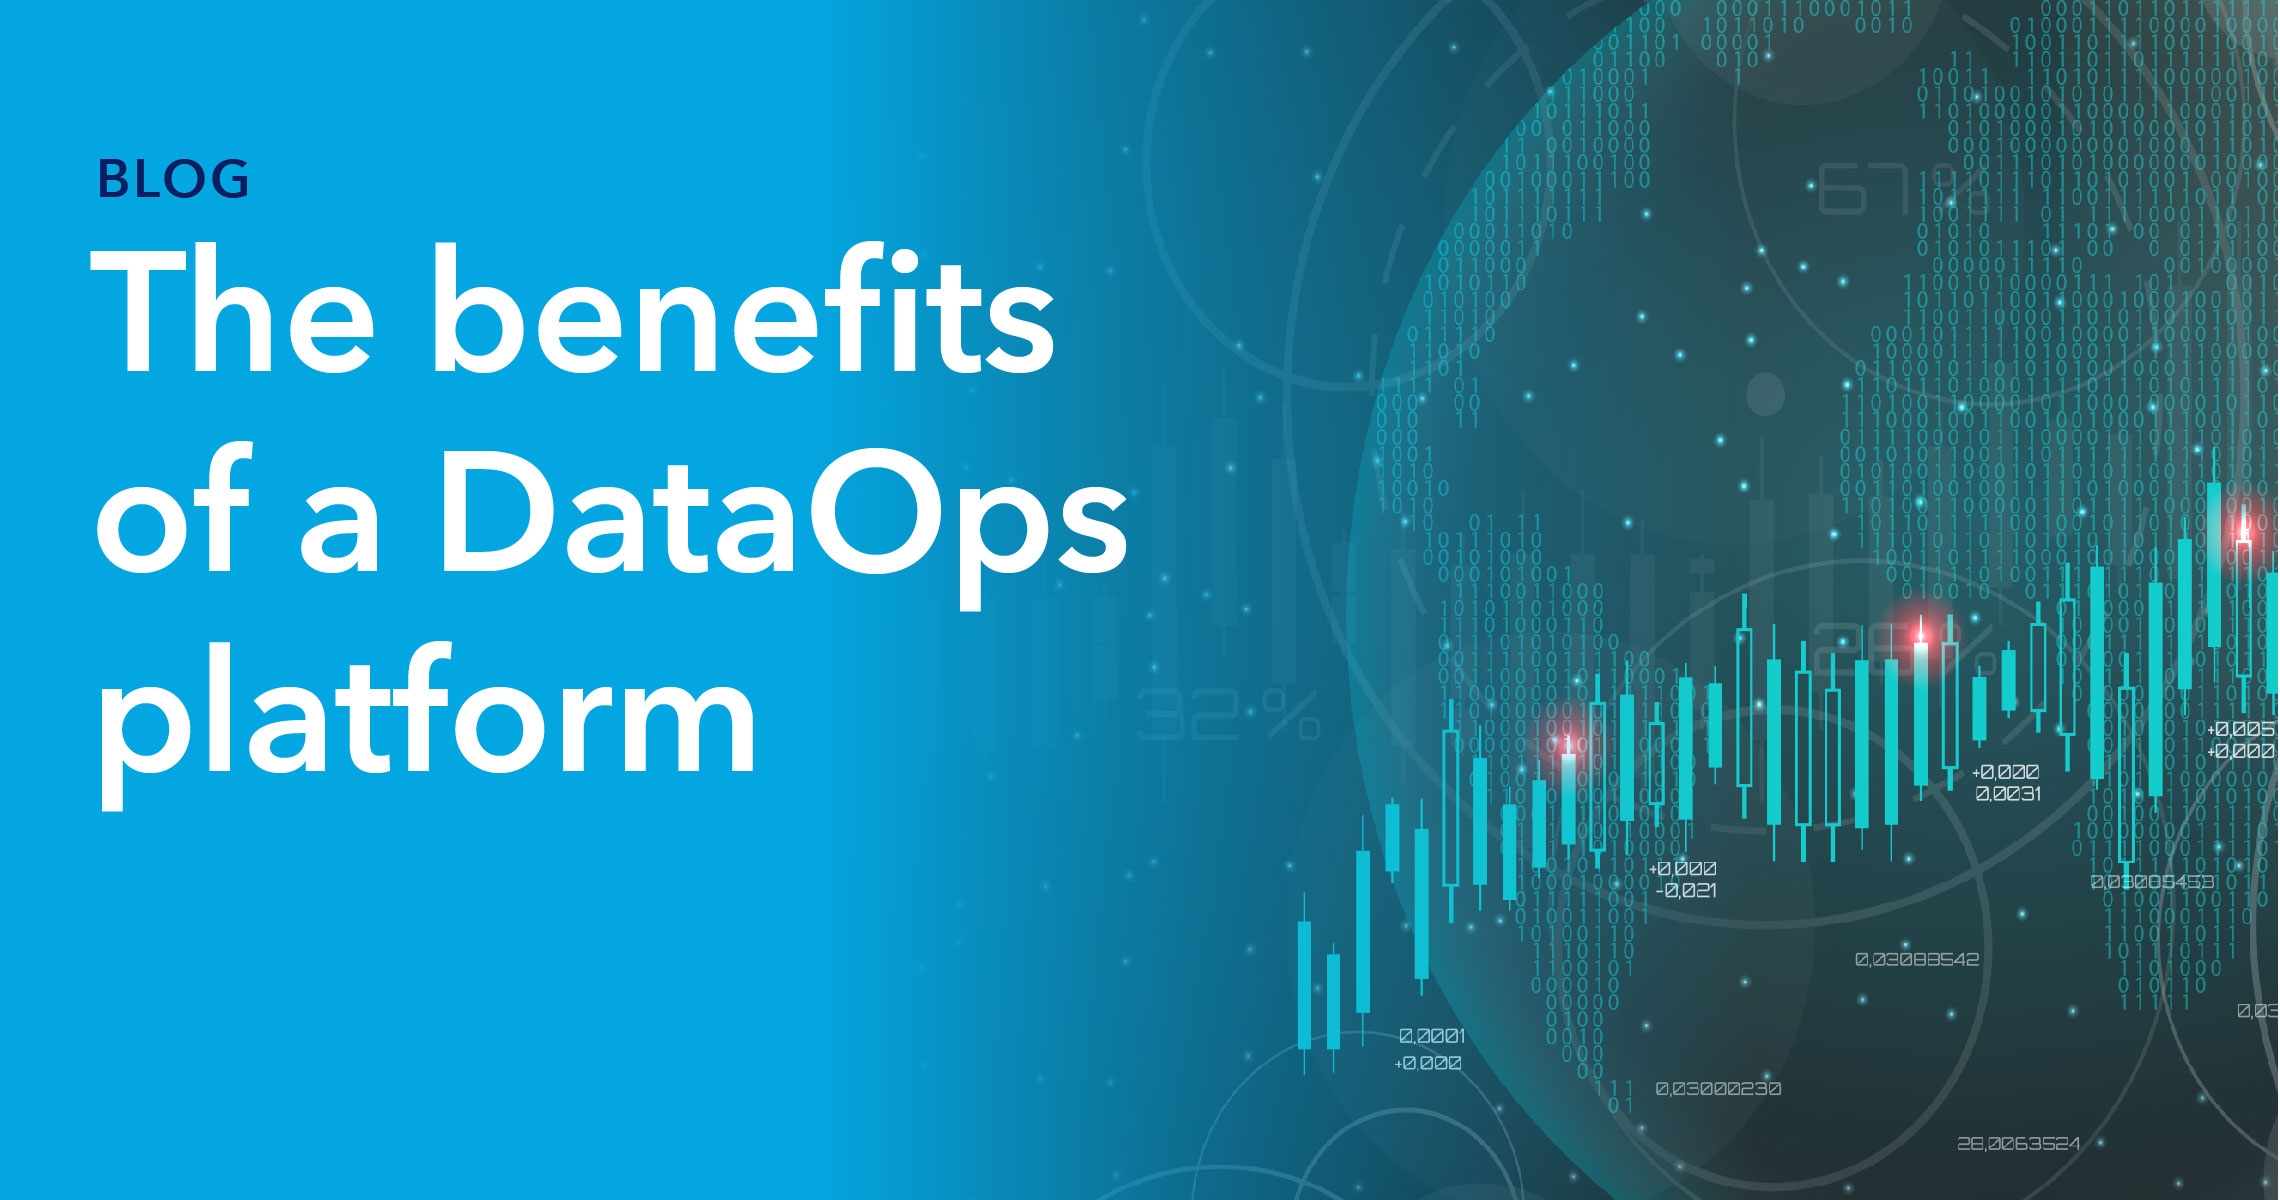 The benefits of a DataOps platform